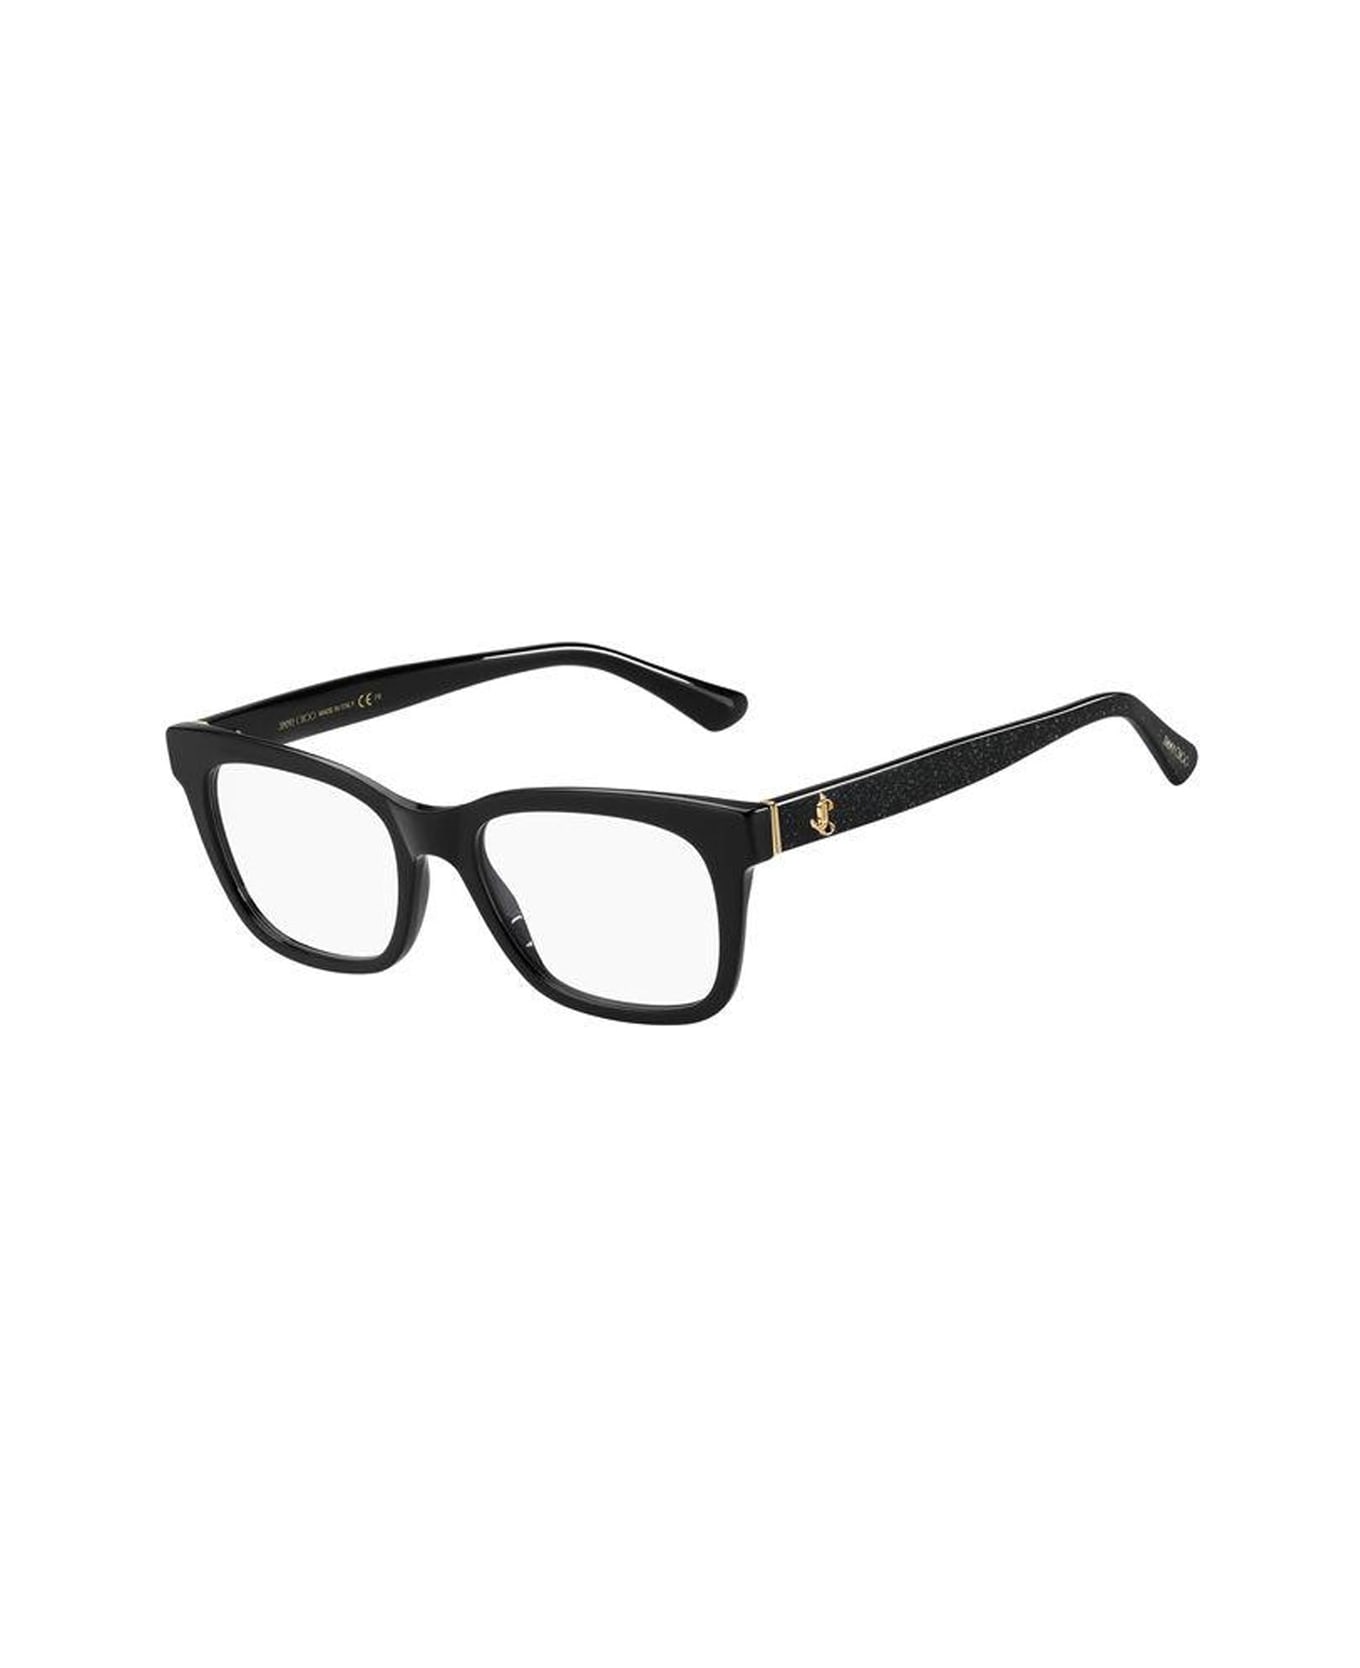 Jimmy Choo Eyewear Jc277 Glasses - Nero